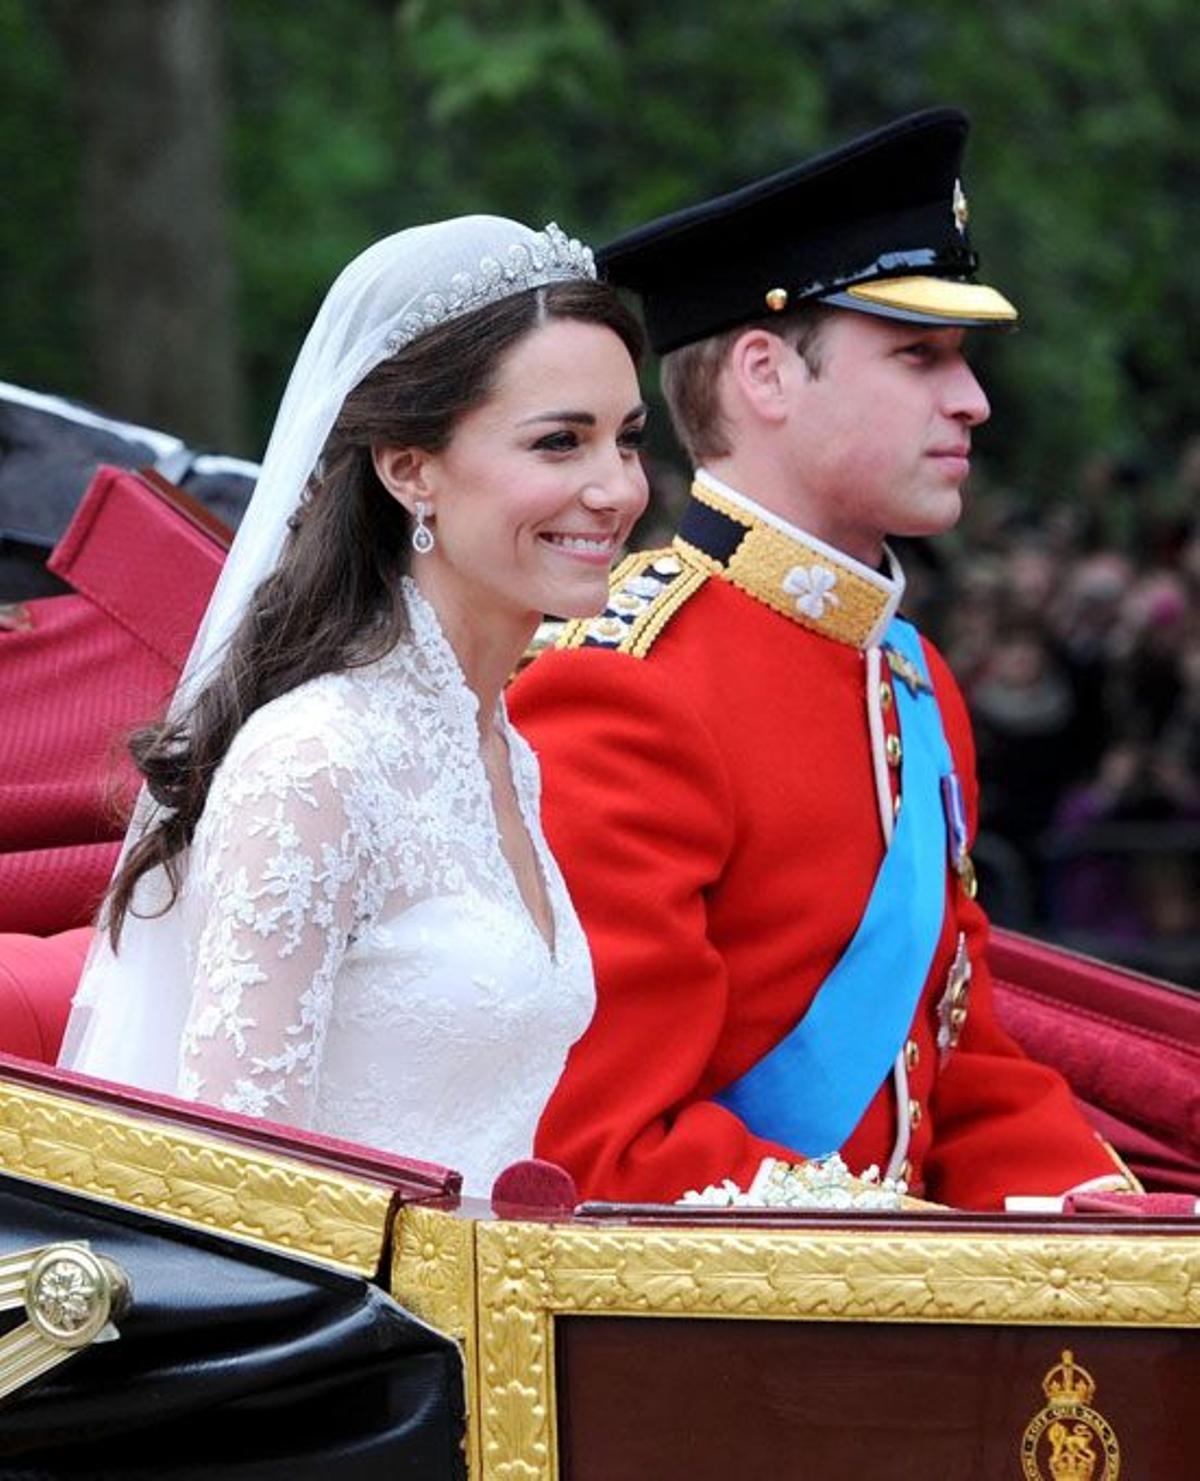 La boda de Kate Middleton y Guillermo